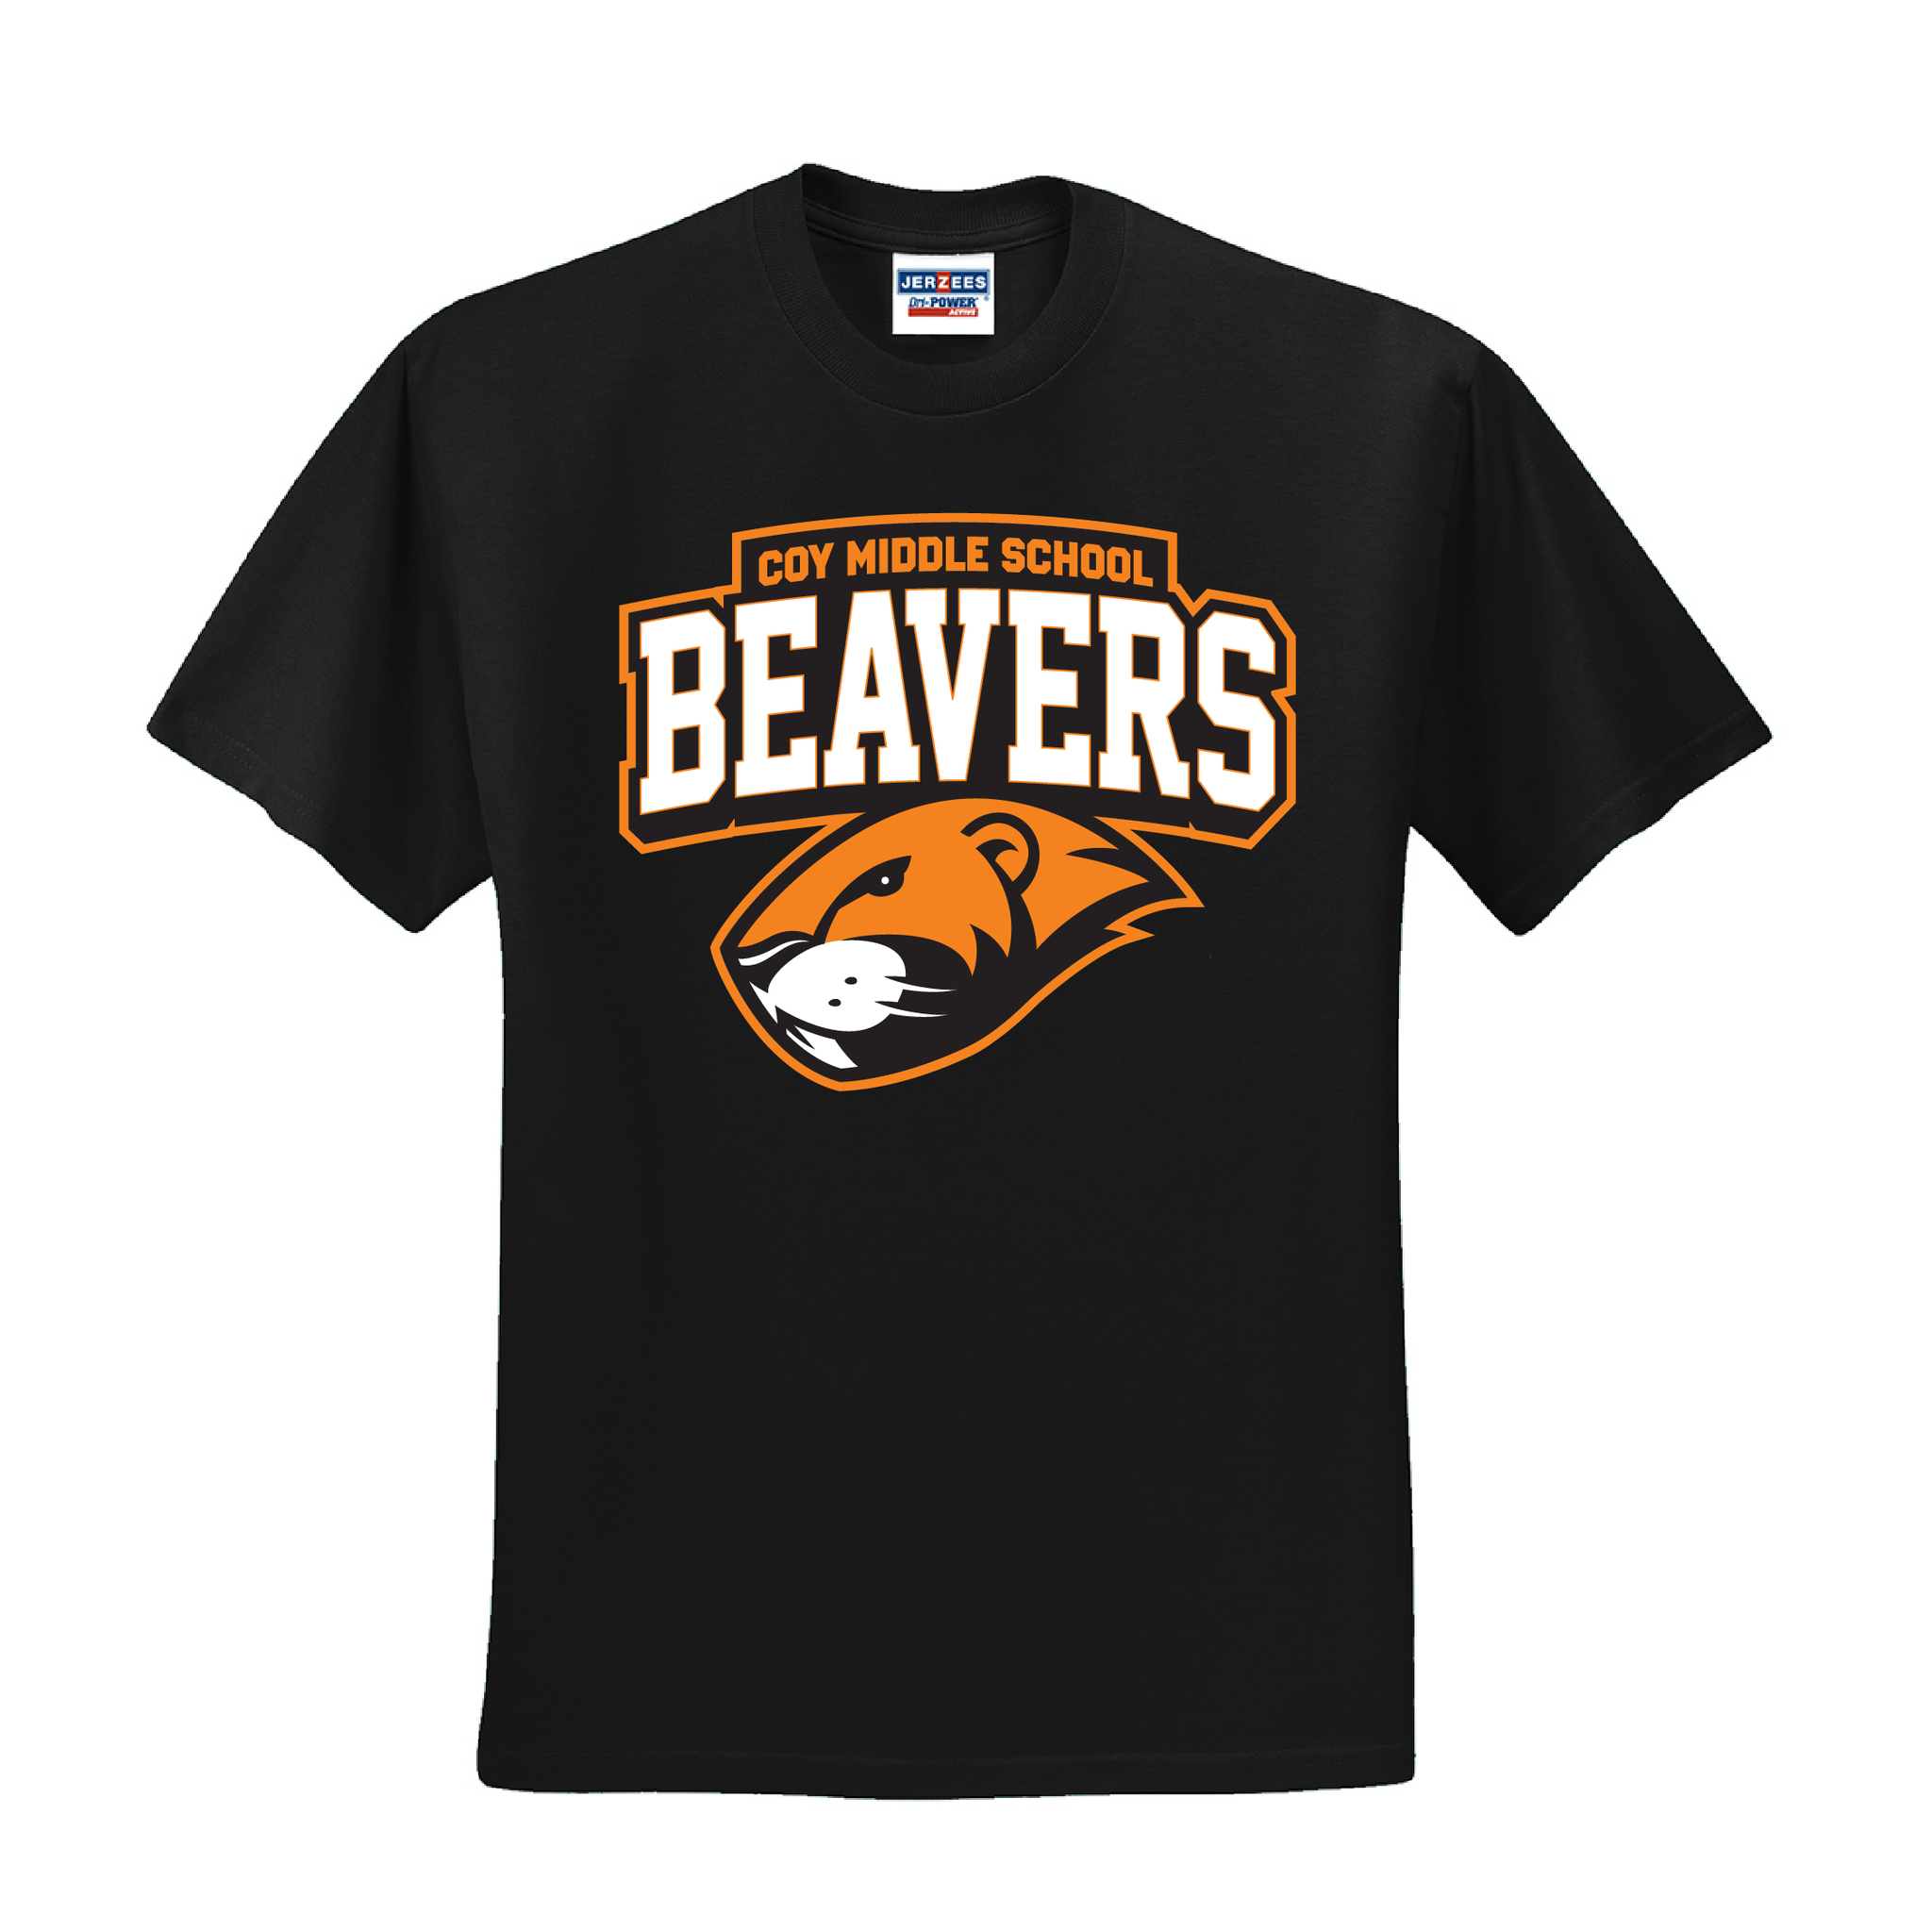 Coy Middle School Beavers T-Shirt